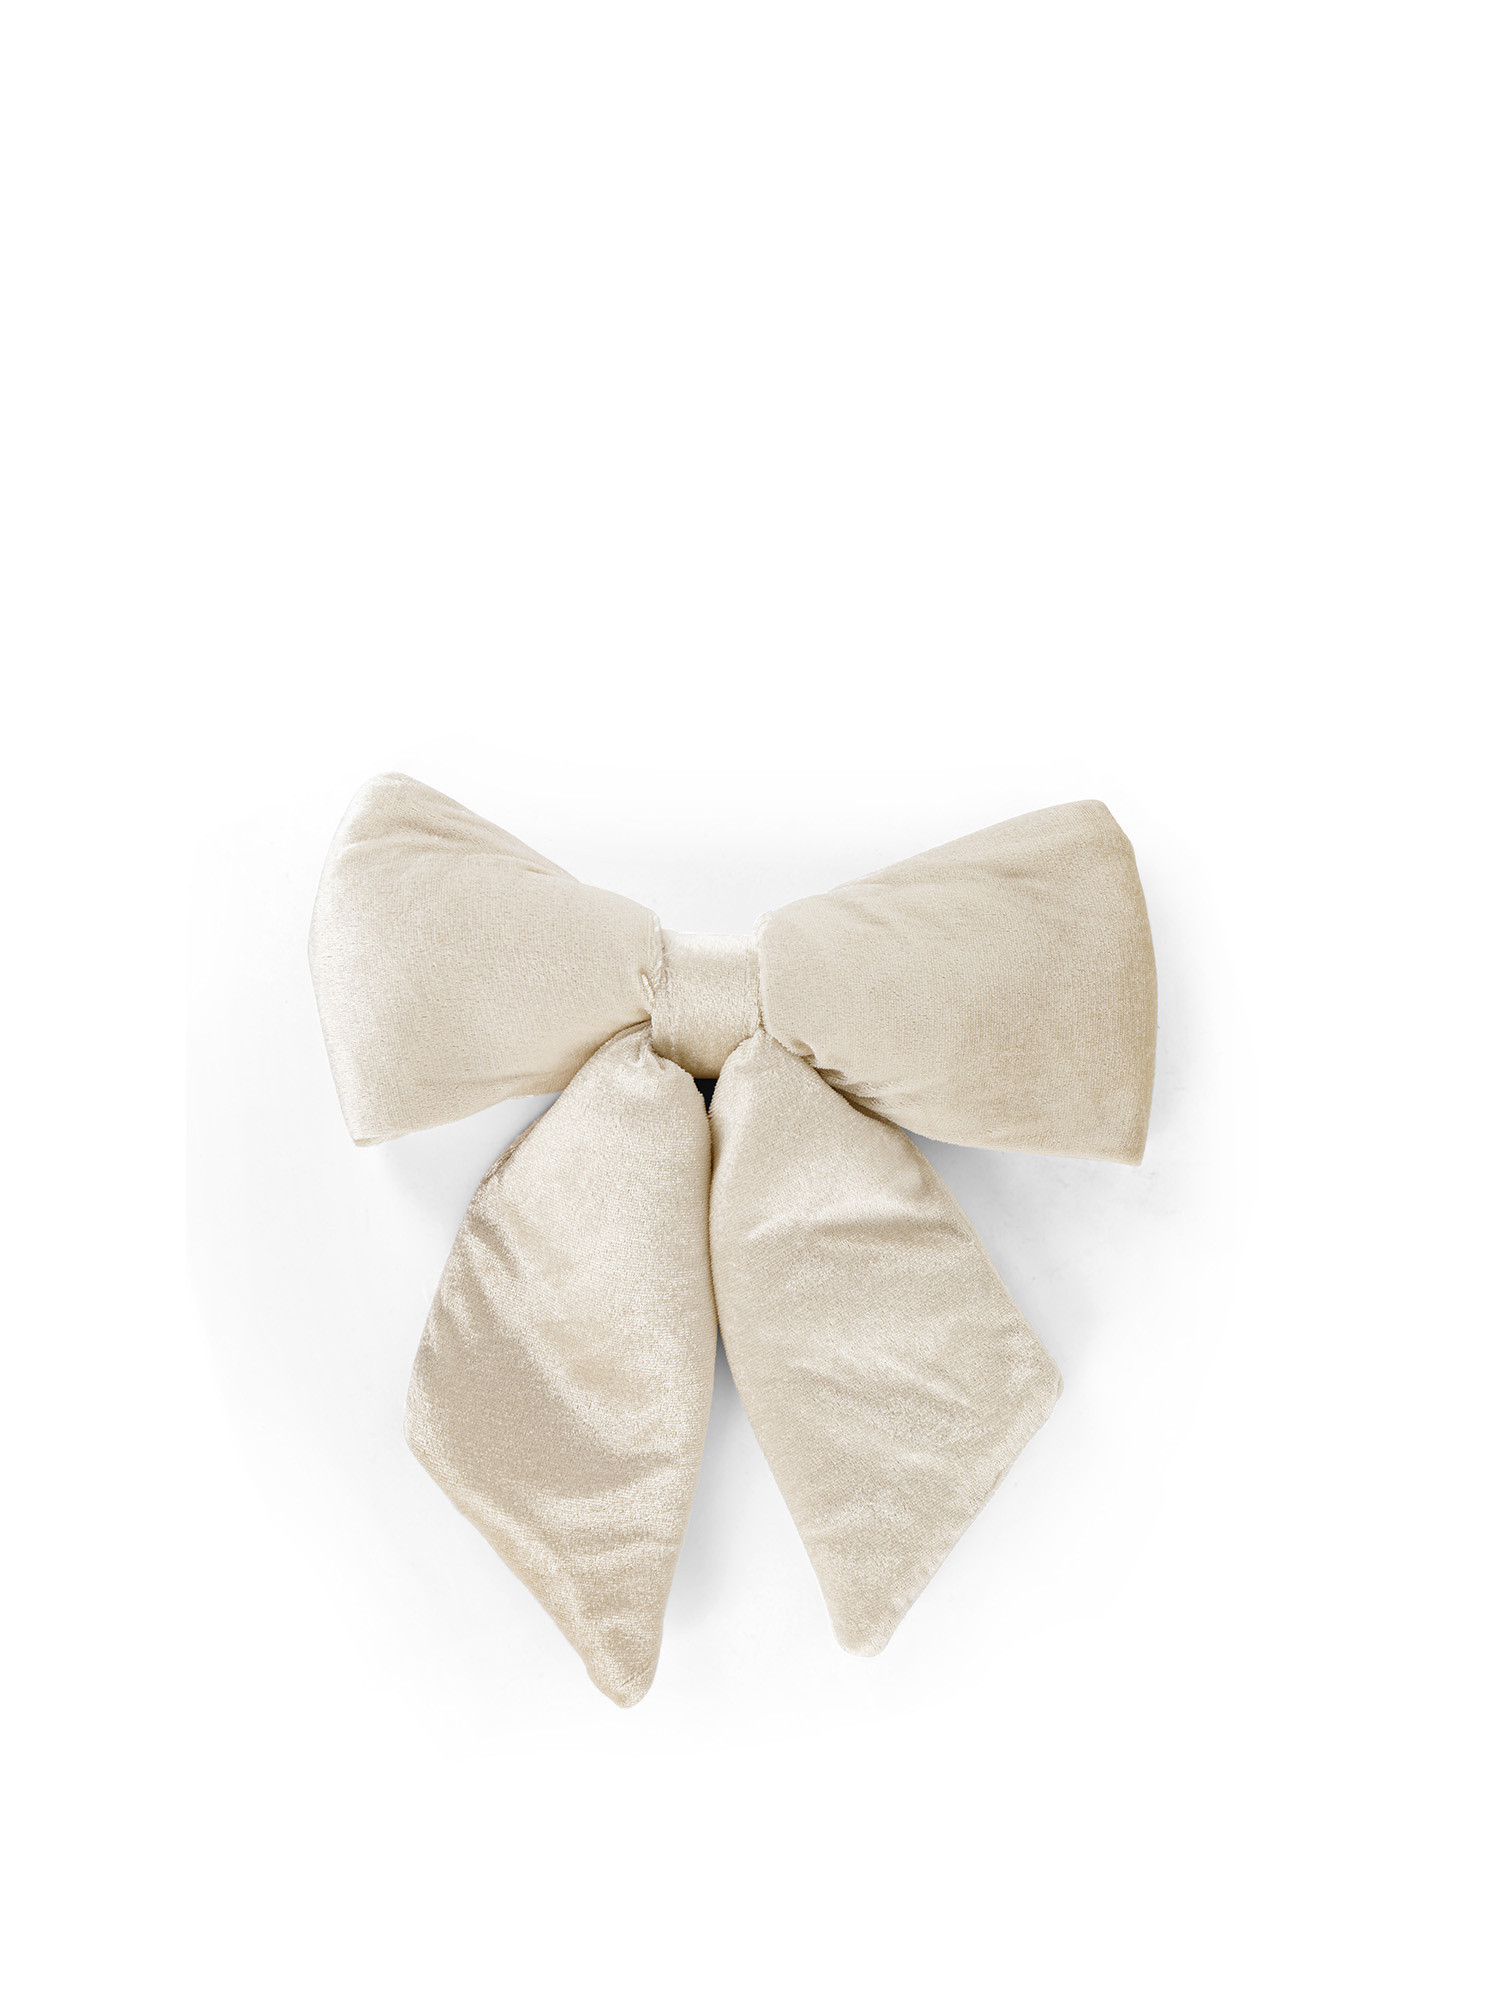 Decorative velvet bow, White, large image number 0